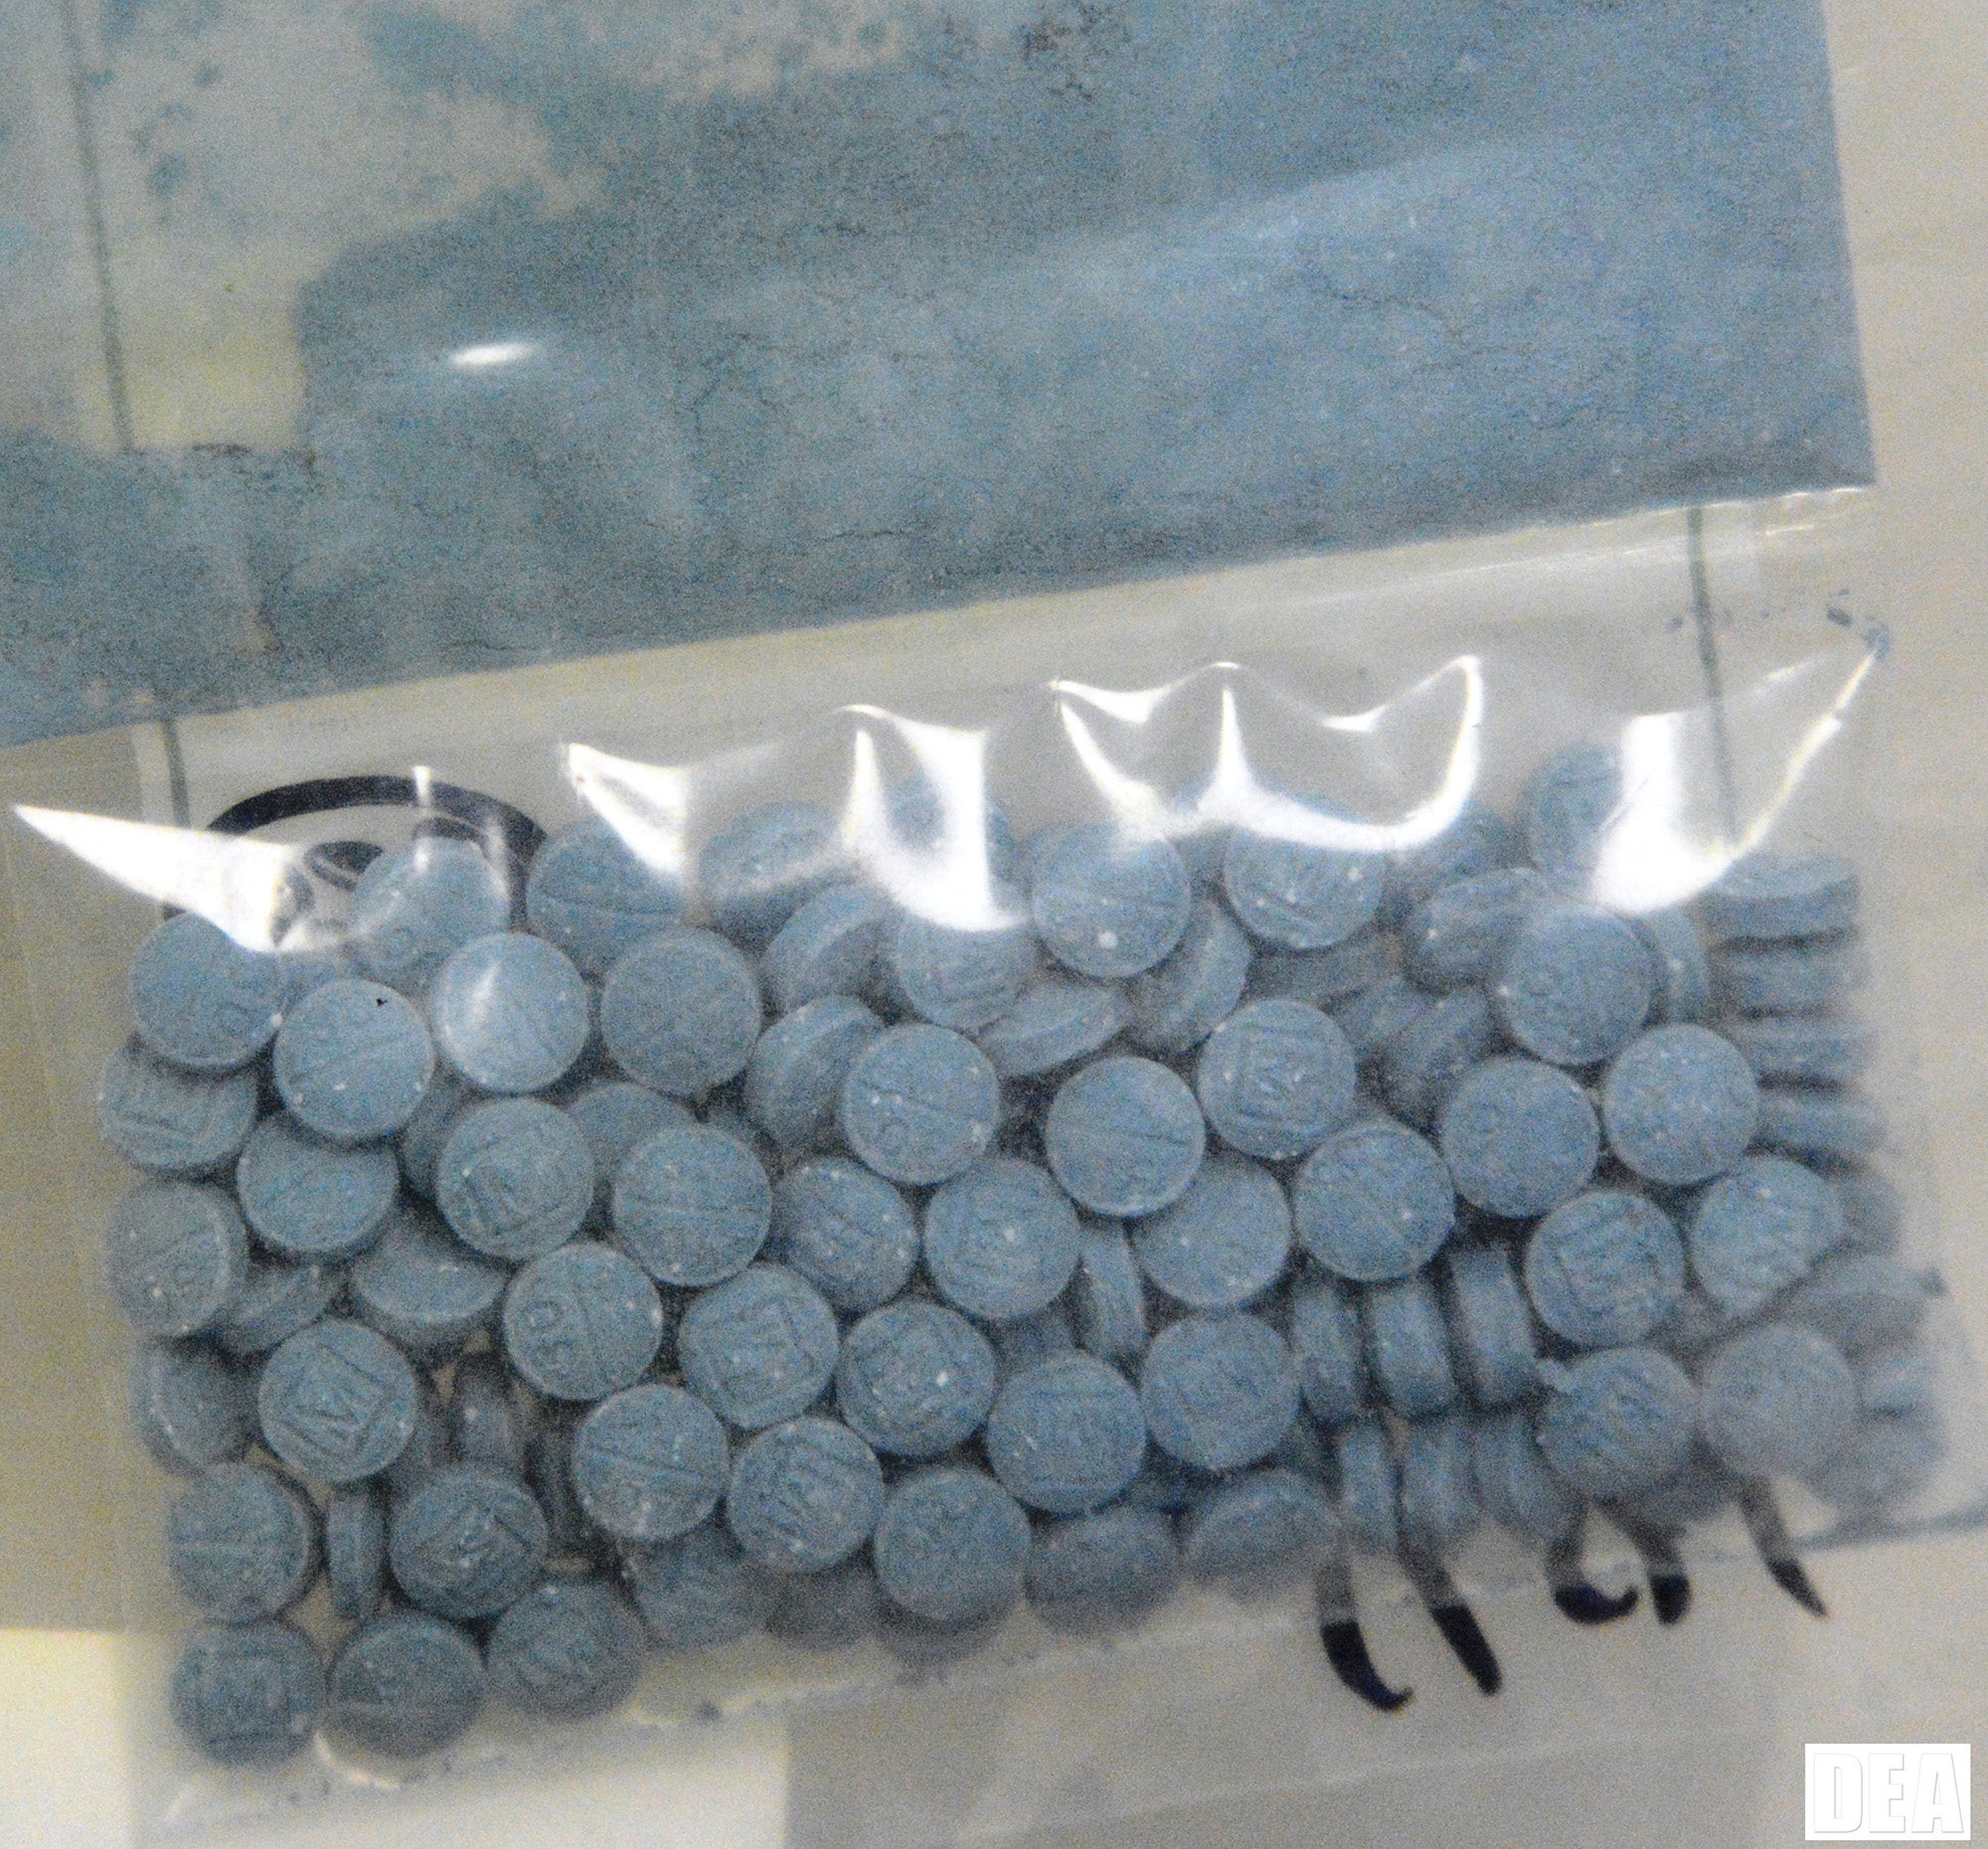 A bag of heroin fentanyl pills. File photo:  US Drug Enforcement Administration via TNS